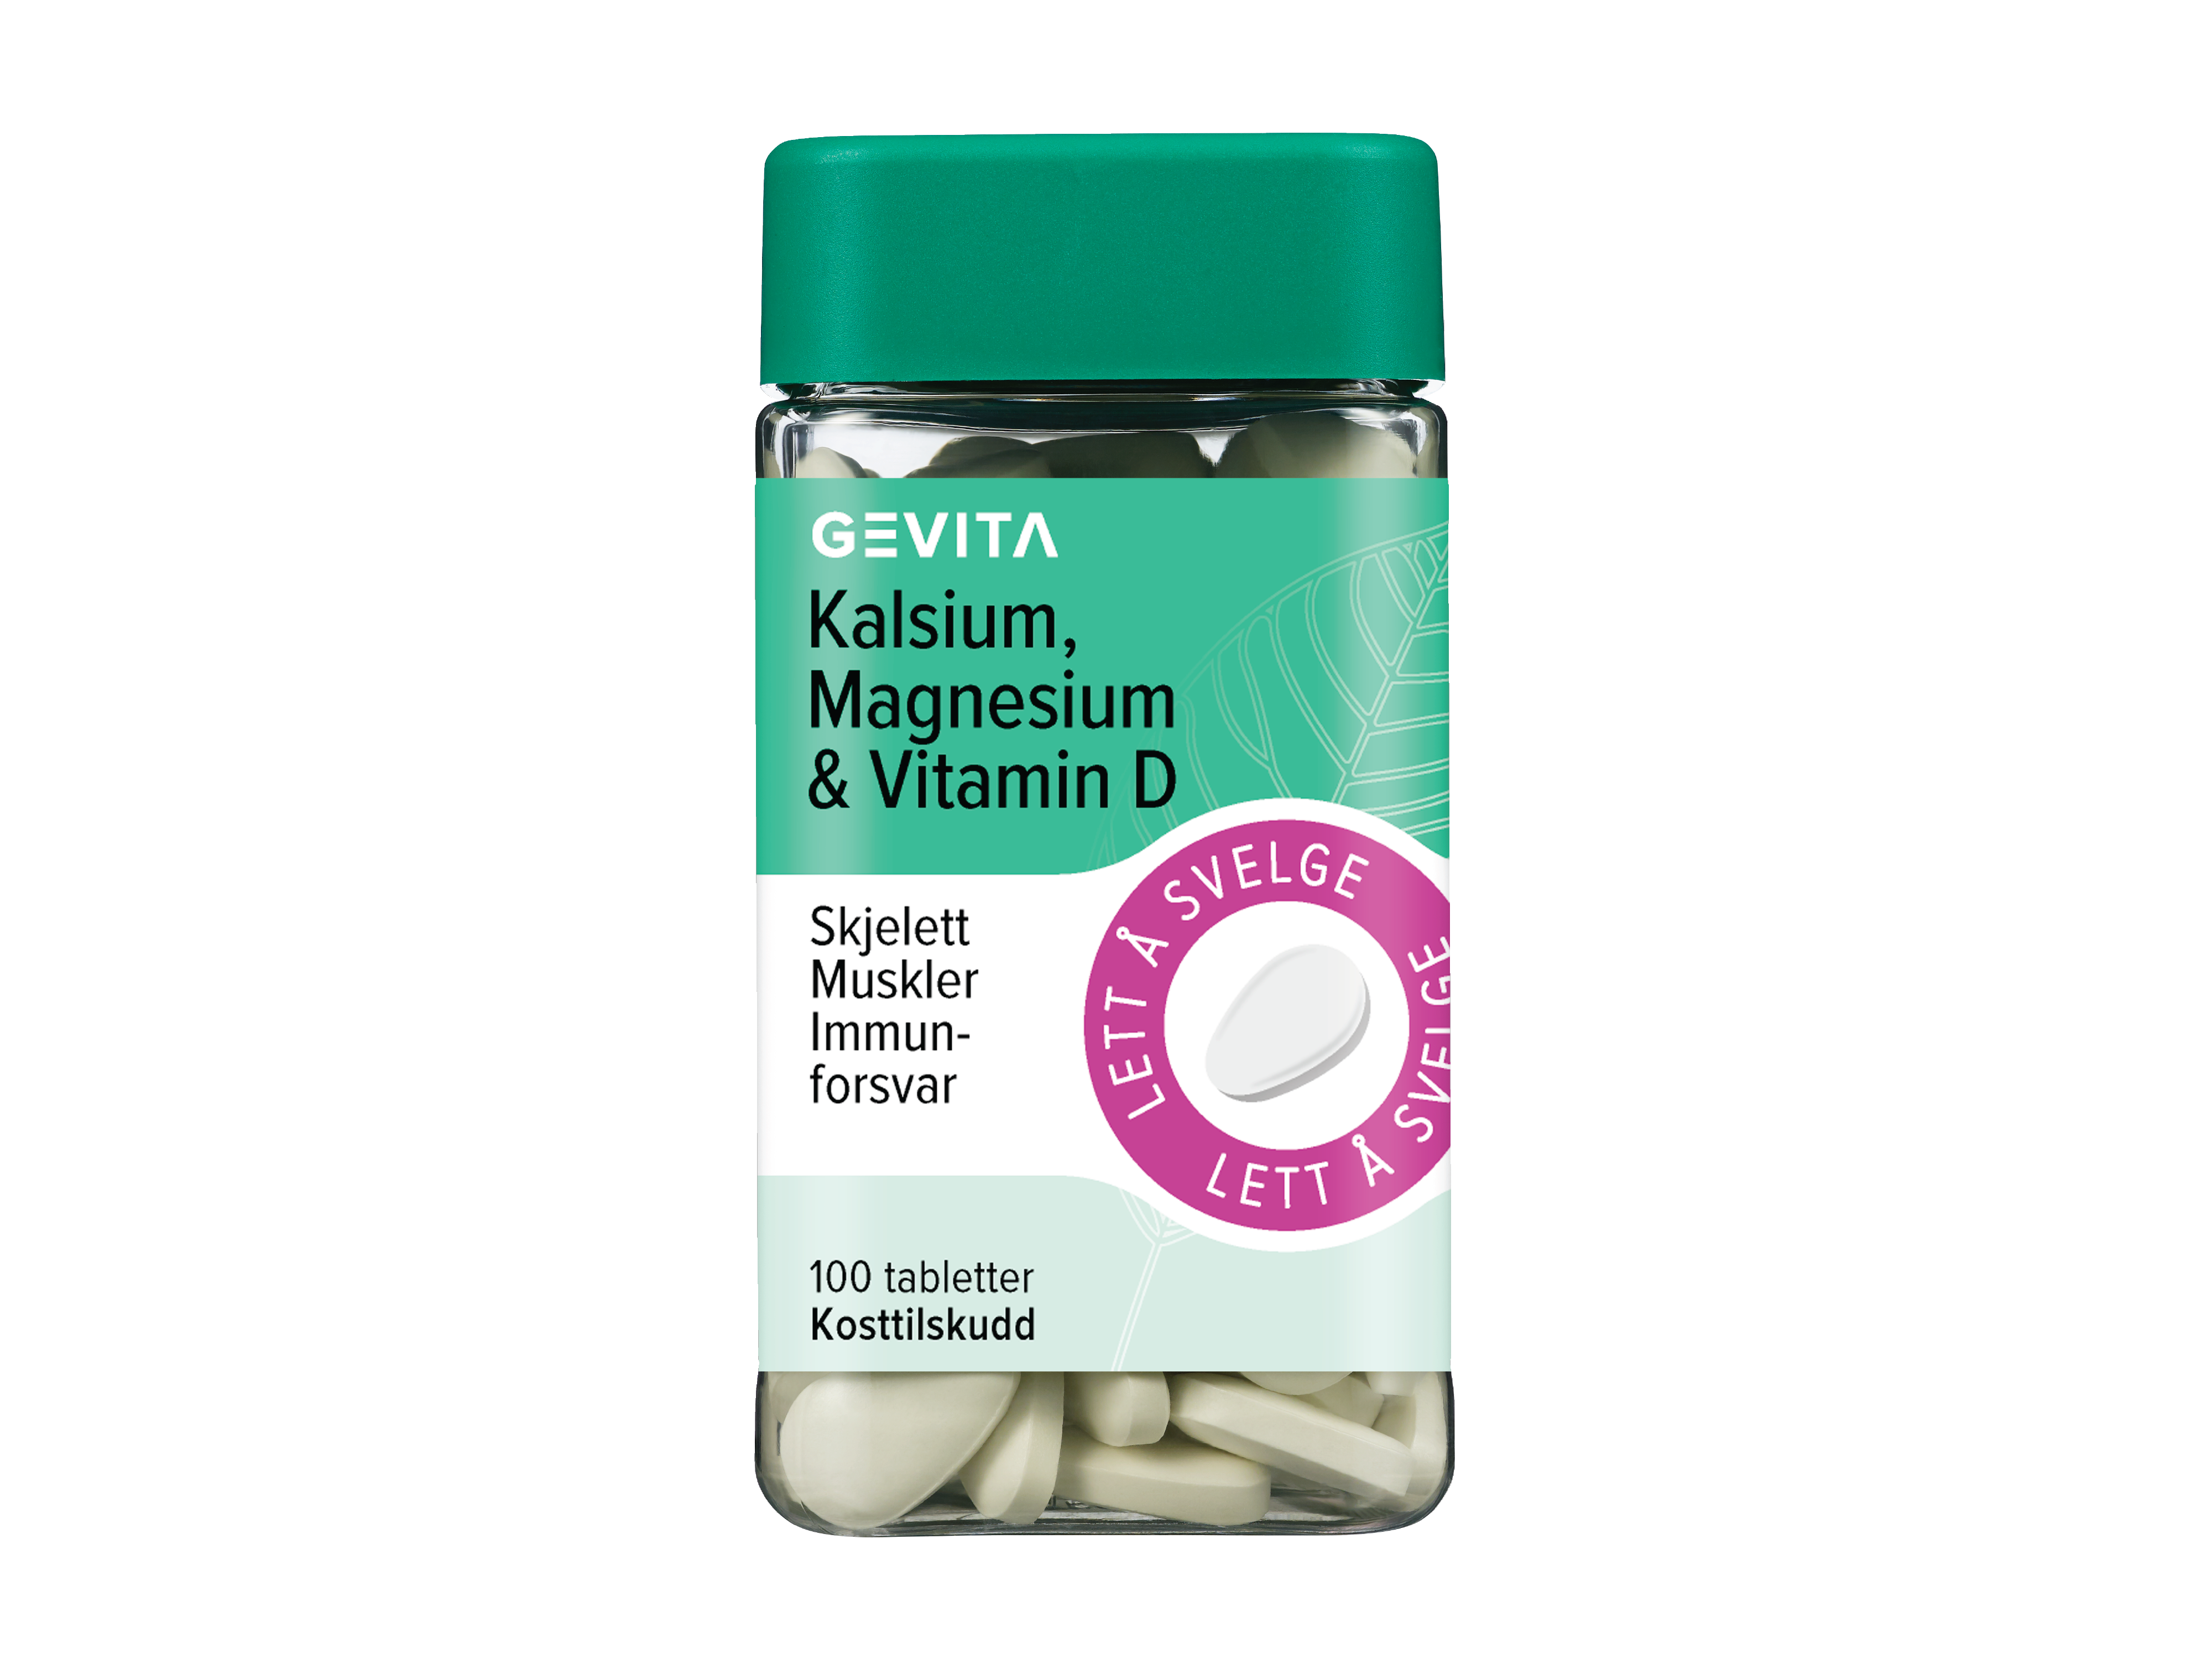 Gevita Kalsium, Magnesium & Vitamin D, 100 tabletter